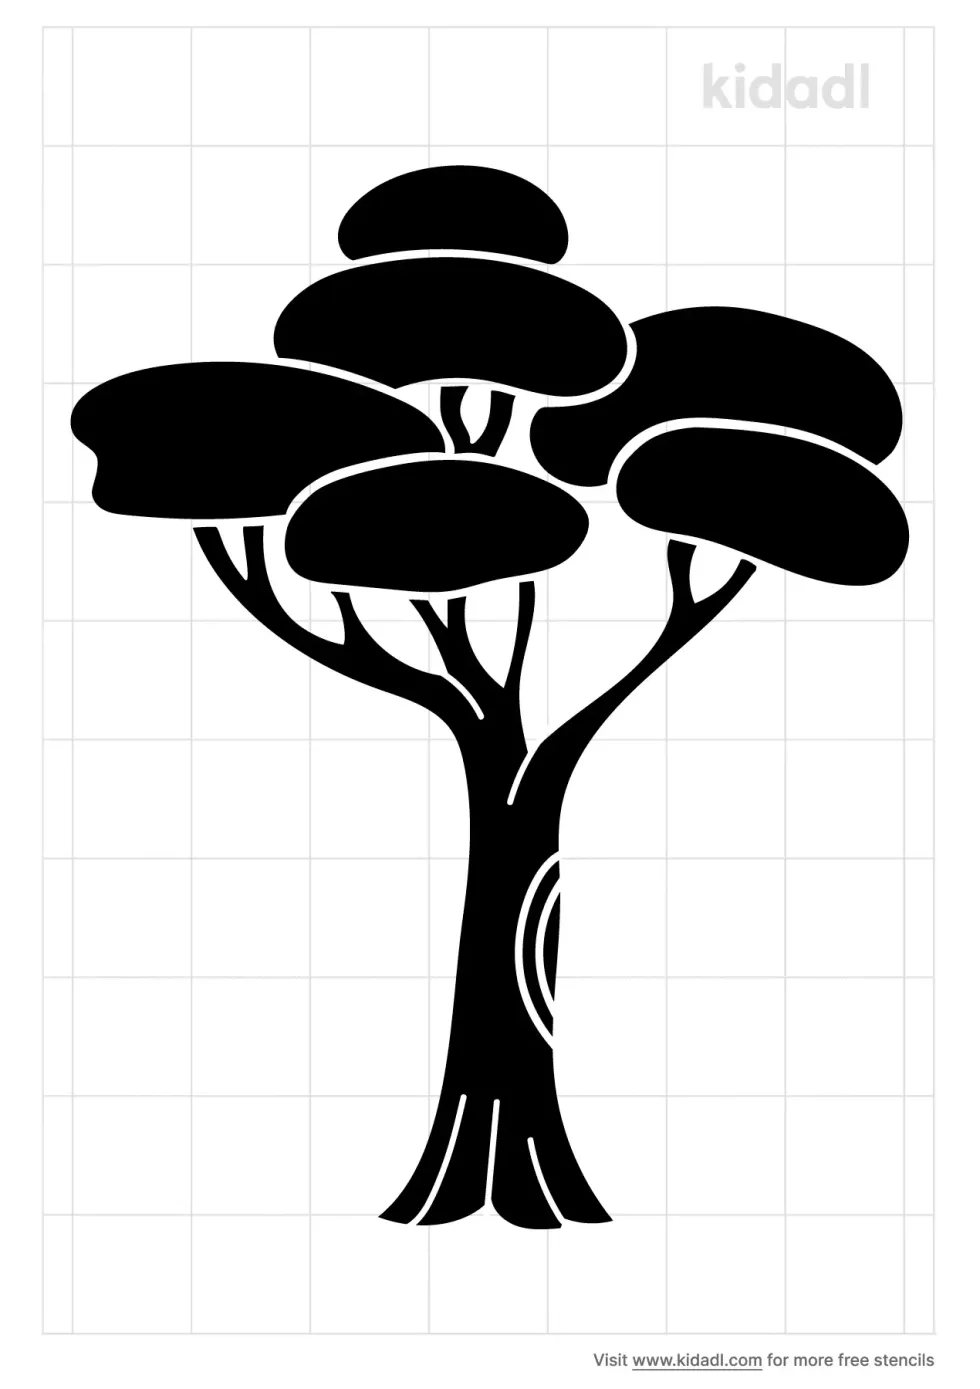 Cartoon Jungle Tree